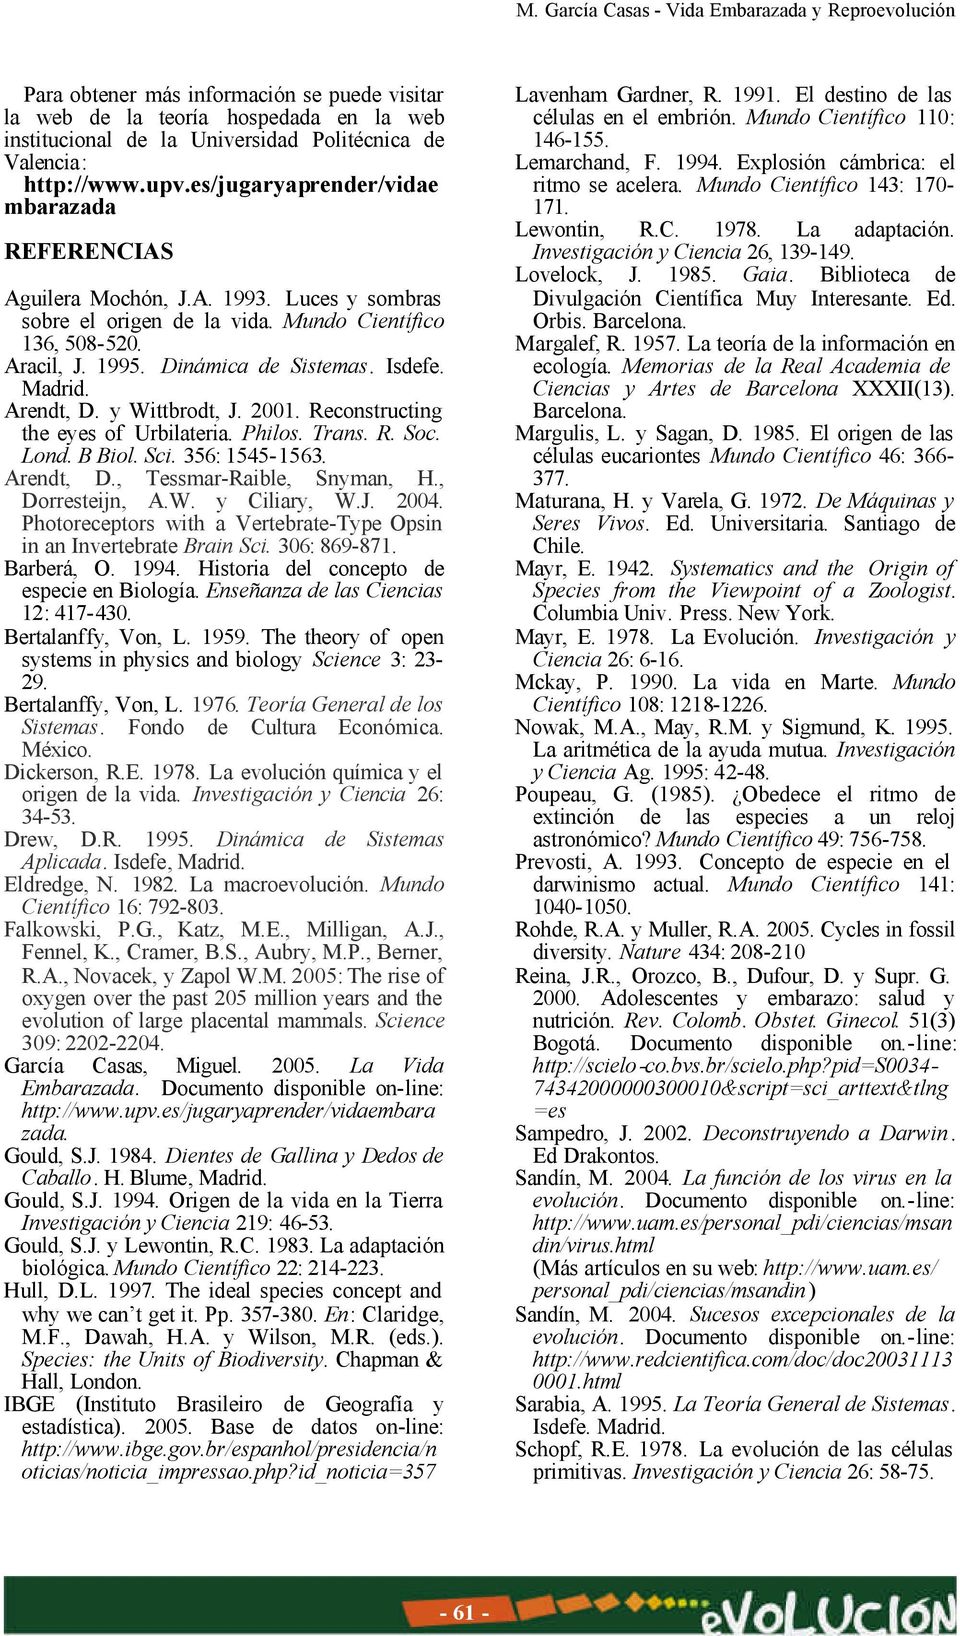 Madrid. Arendt, D. y Wittbrodt, J. 2001. Reconstructing the eyes of Urbilateria. Philos. Trans. R. Soc. Lond. B Biol. Sci. 356: 1545-1563. Arendt, D., Tessmar-Raible, Snyman, H., Dorresteijn, A.W. y Ciliary, W.